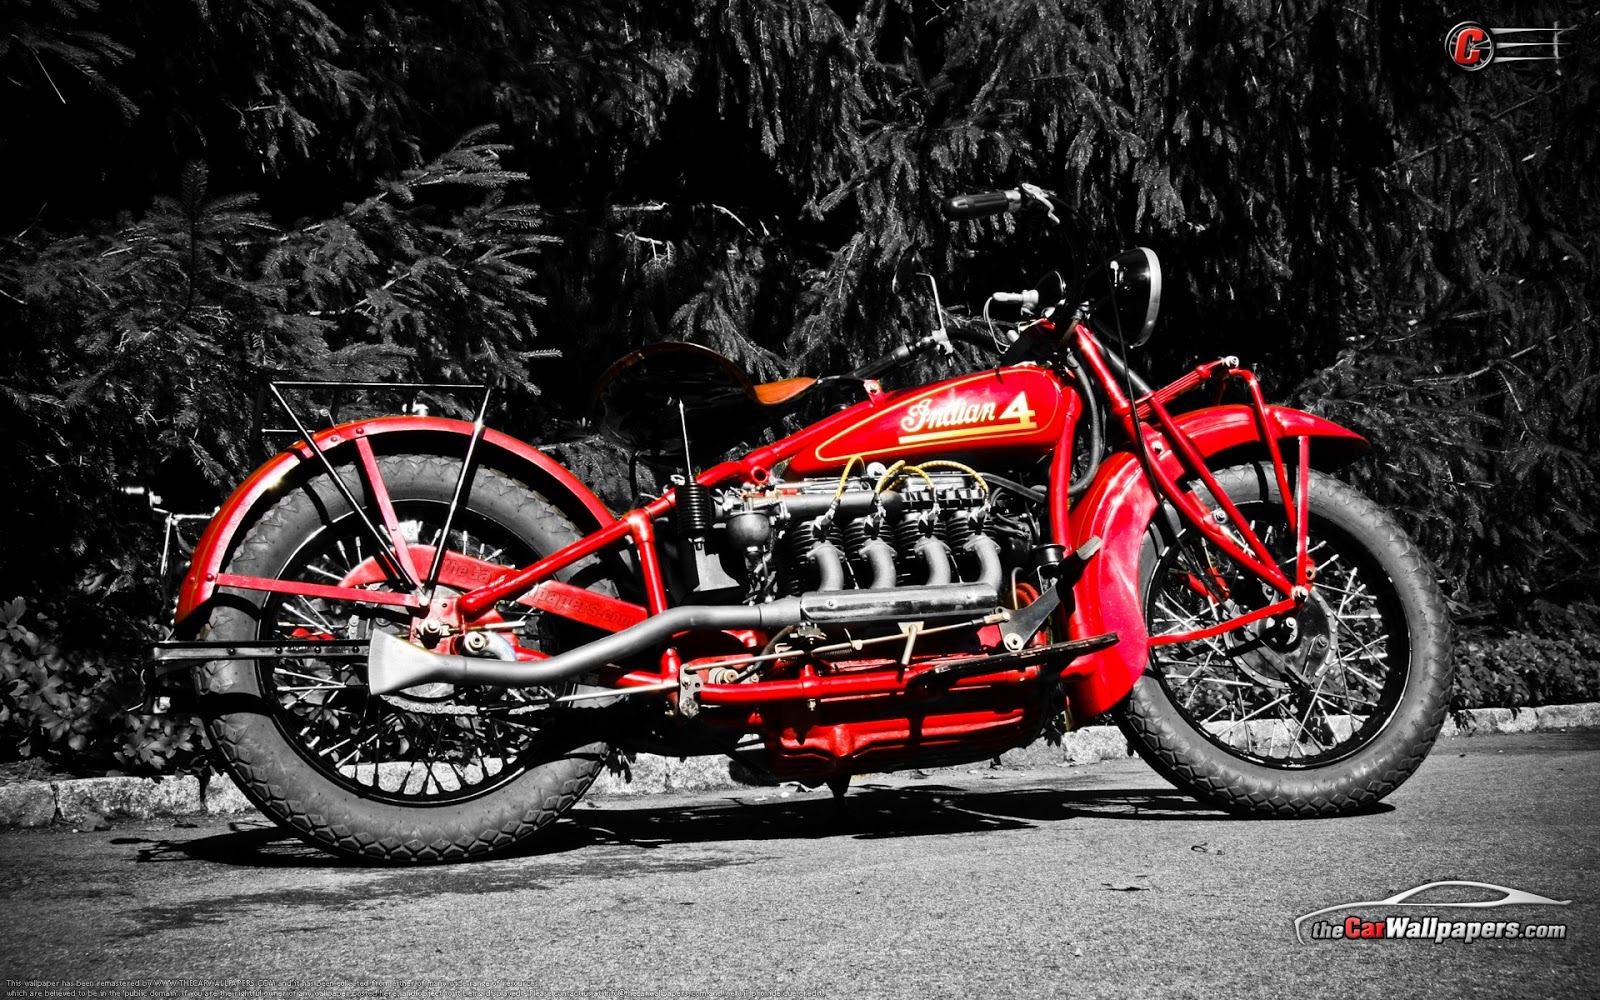 2014 Indian Motorcycle Wallpaper Hd Desktop 10 HD Wallpapers   Indian  motorcycle Motorcycle wallpaper Motorcycle